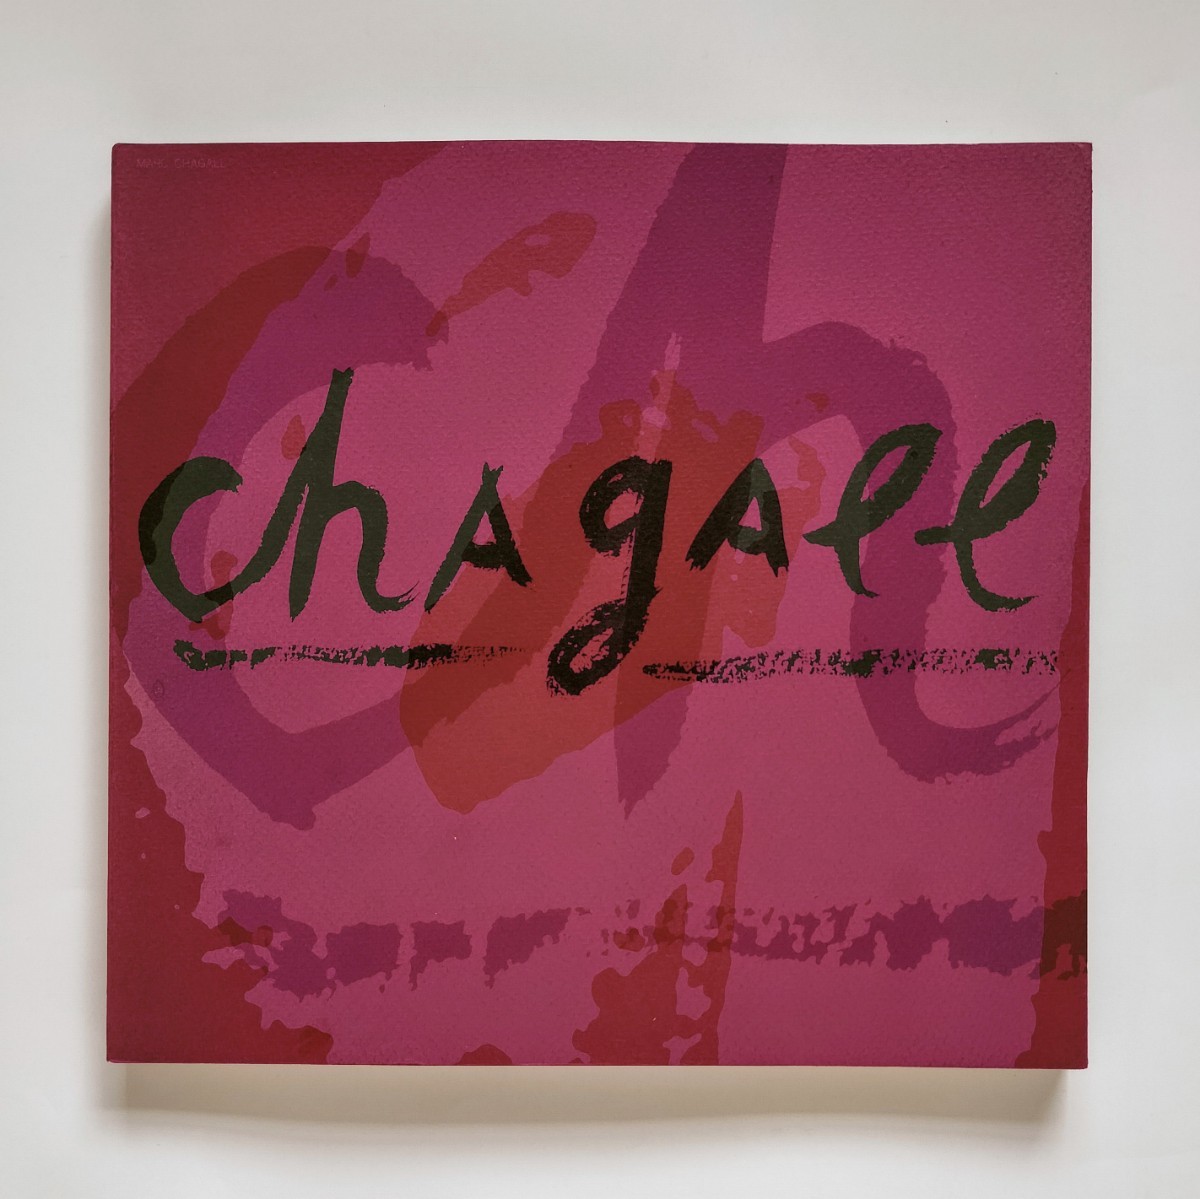 a5.. Chagall Ausstellung Kunstfreundeverein, Veröffentlicht 1963, Malerei, Kunstbuch, Sammlung, Katalog